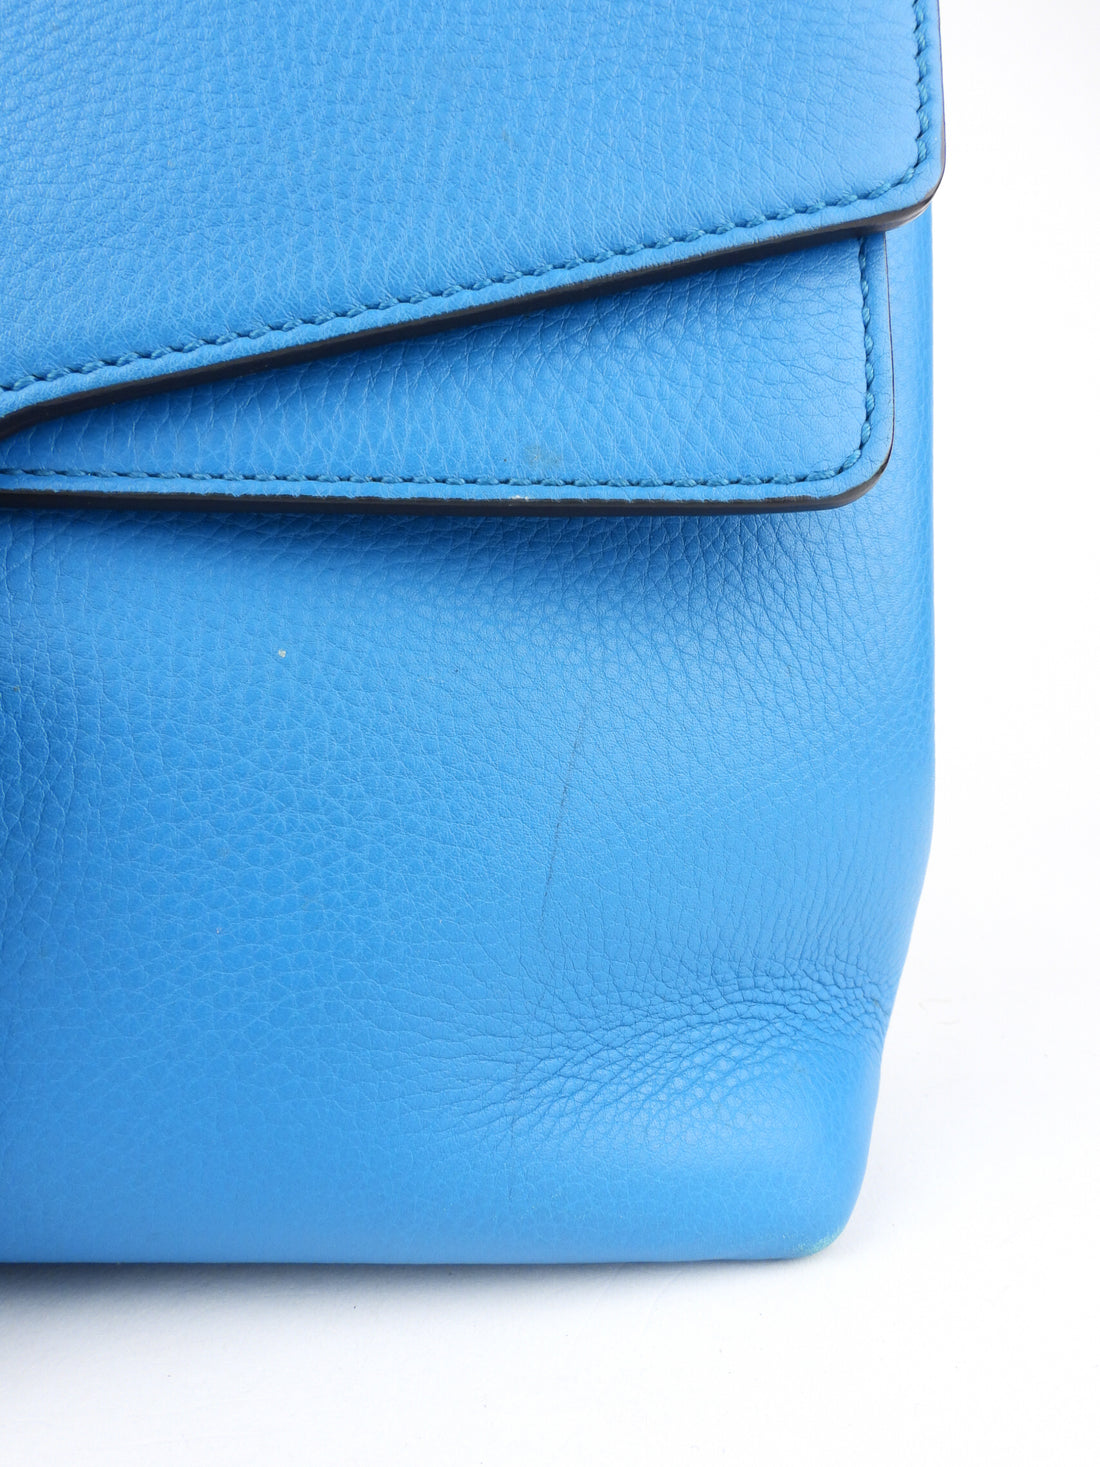 Gucci Turquoise Blue Calfskin Leather Marmont Shoulder Bag